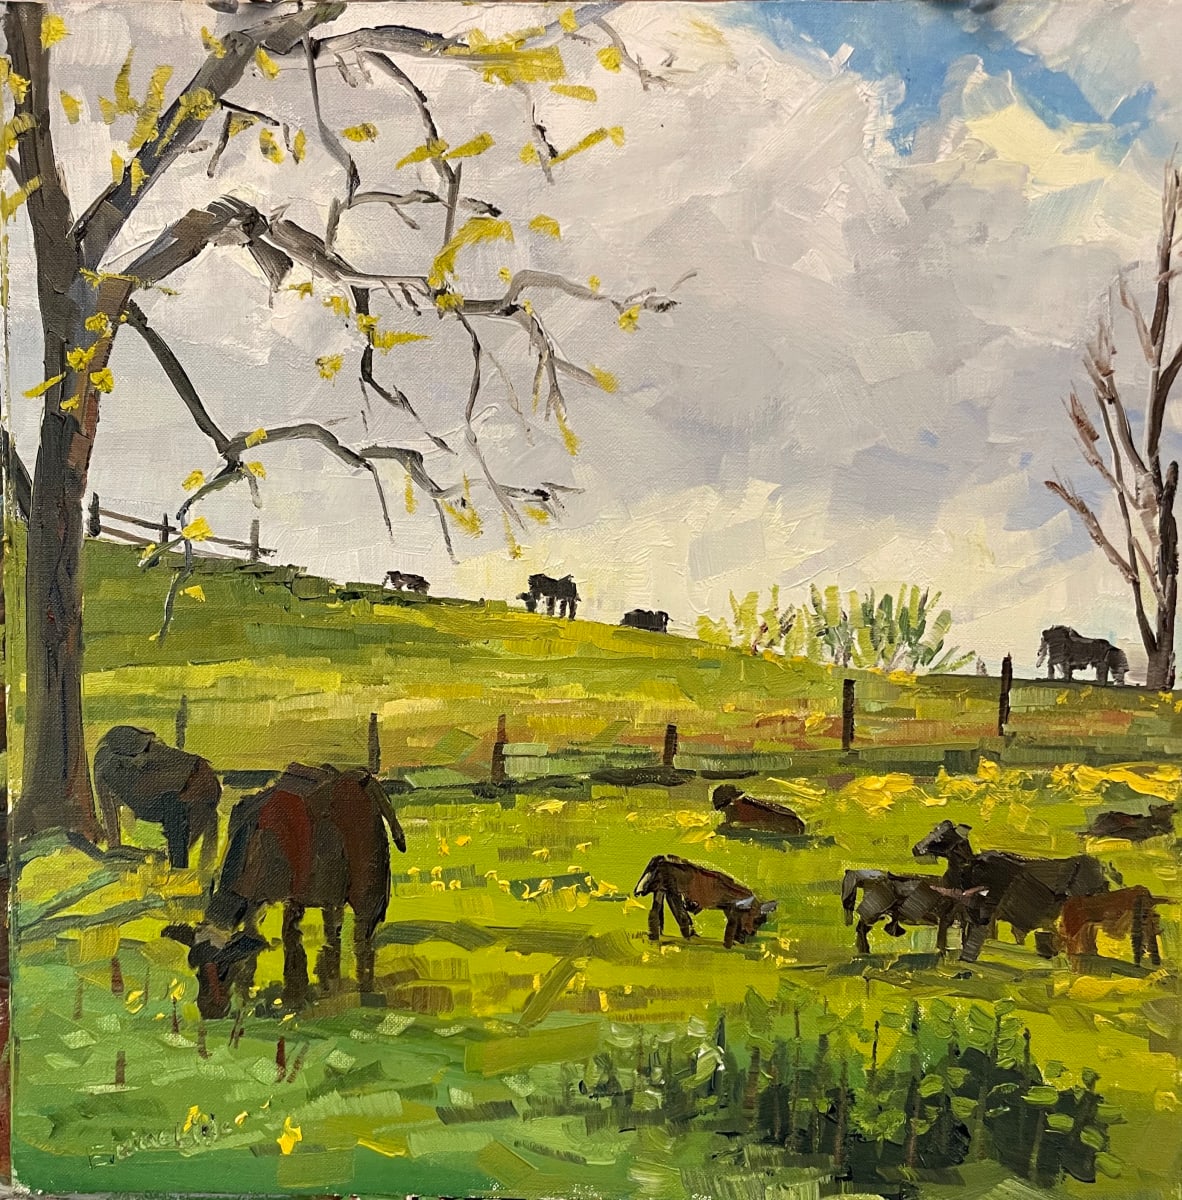 Cows & Heifers morning chow by Elaine Lisle 